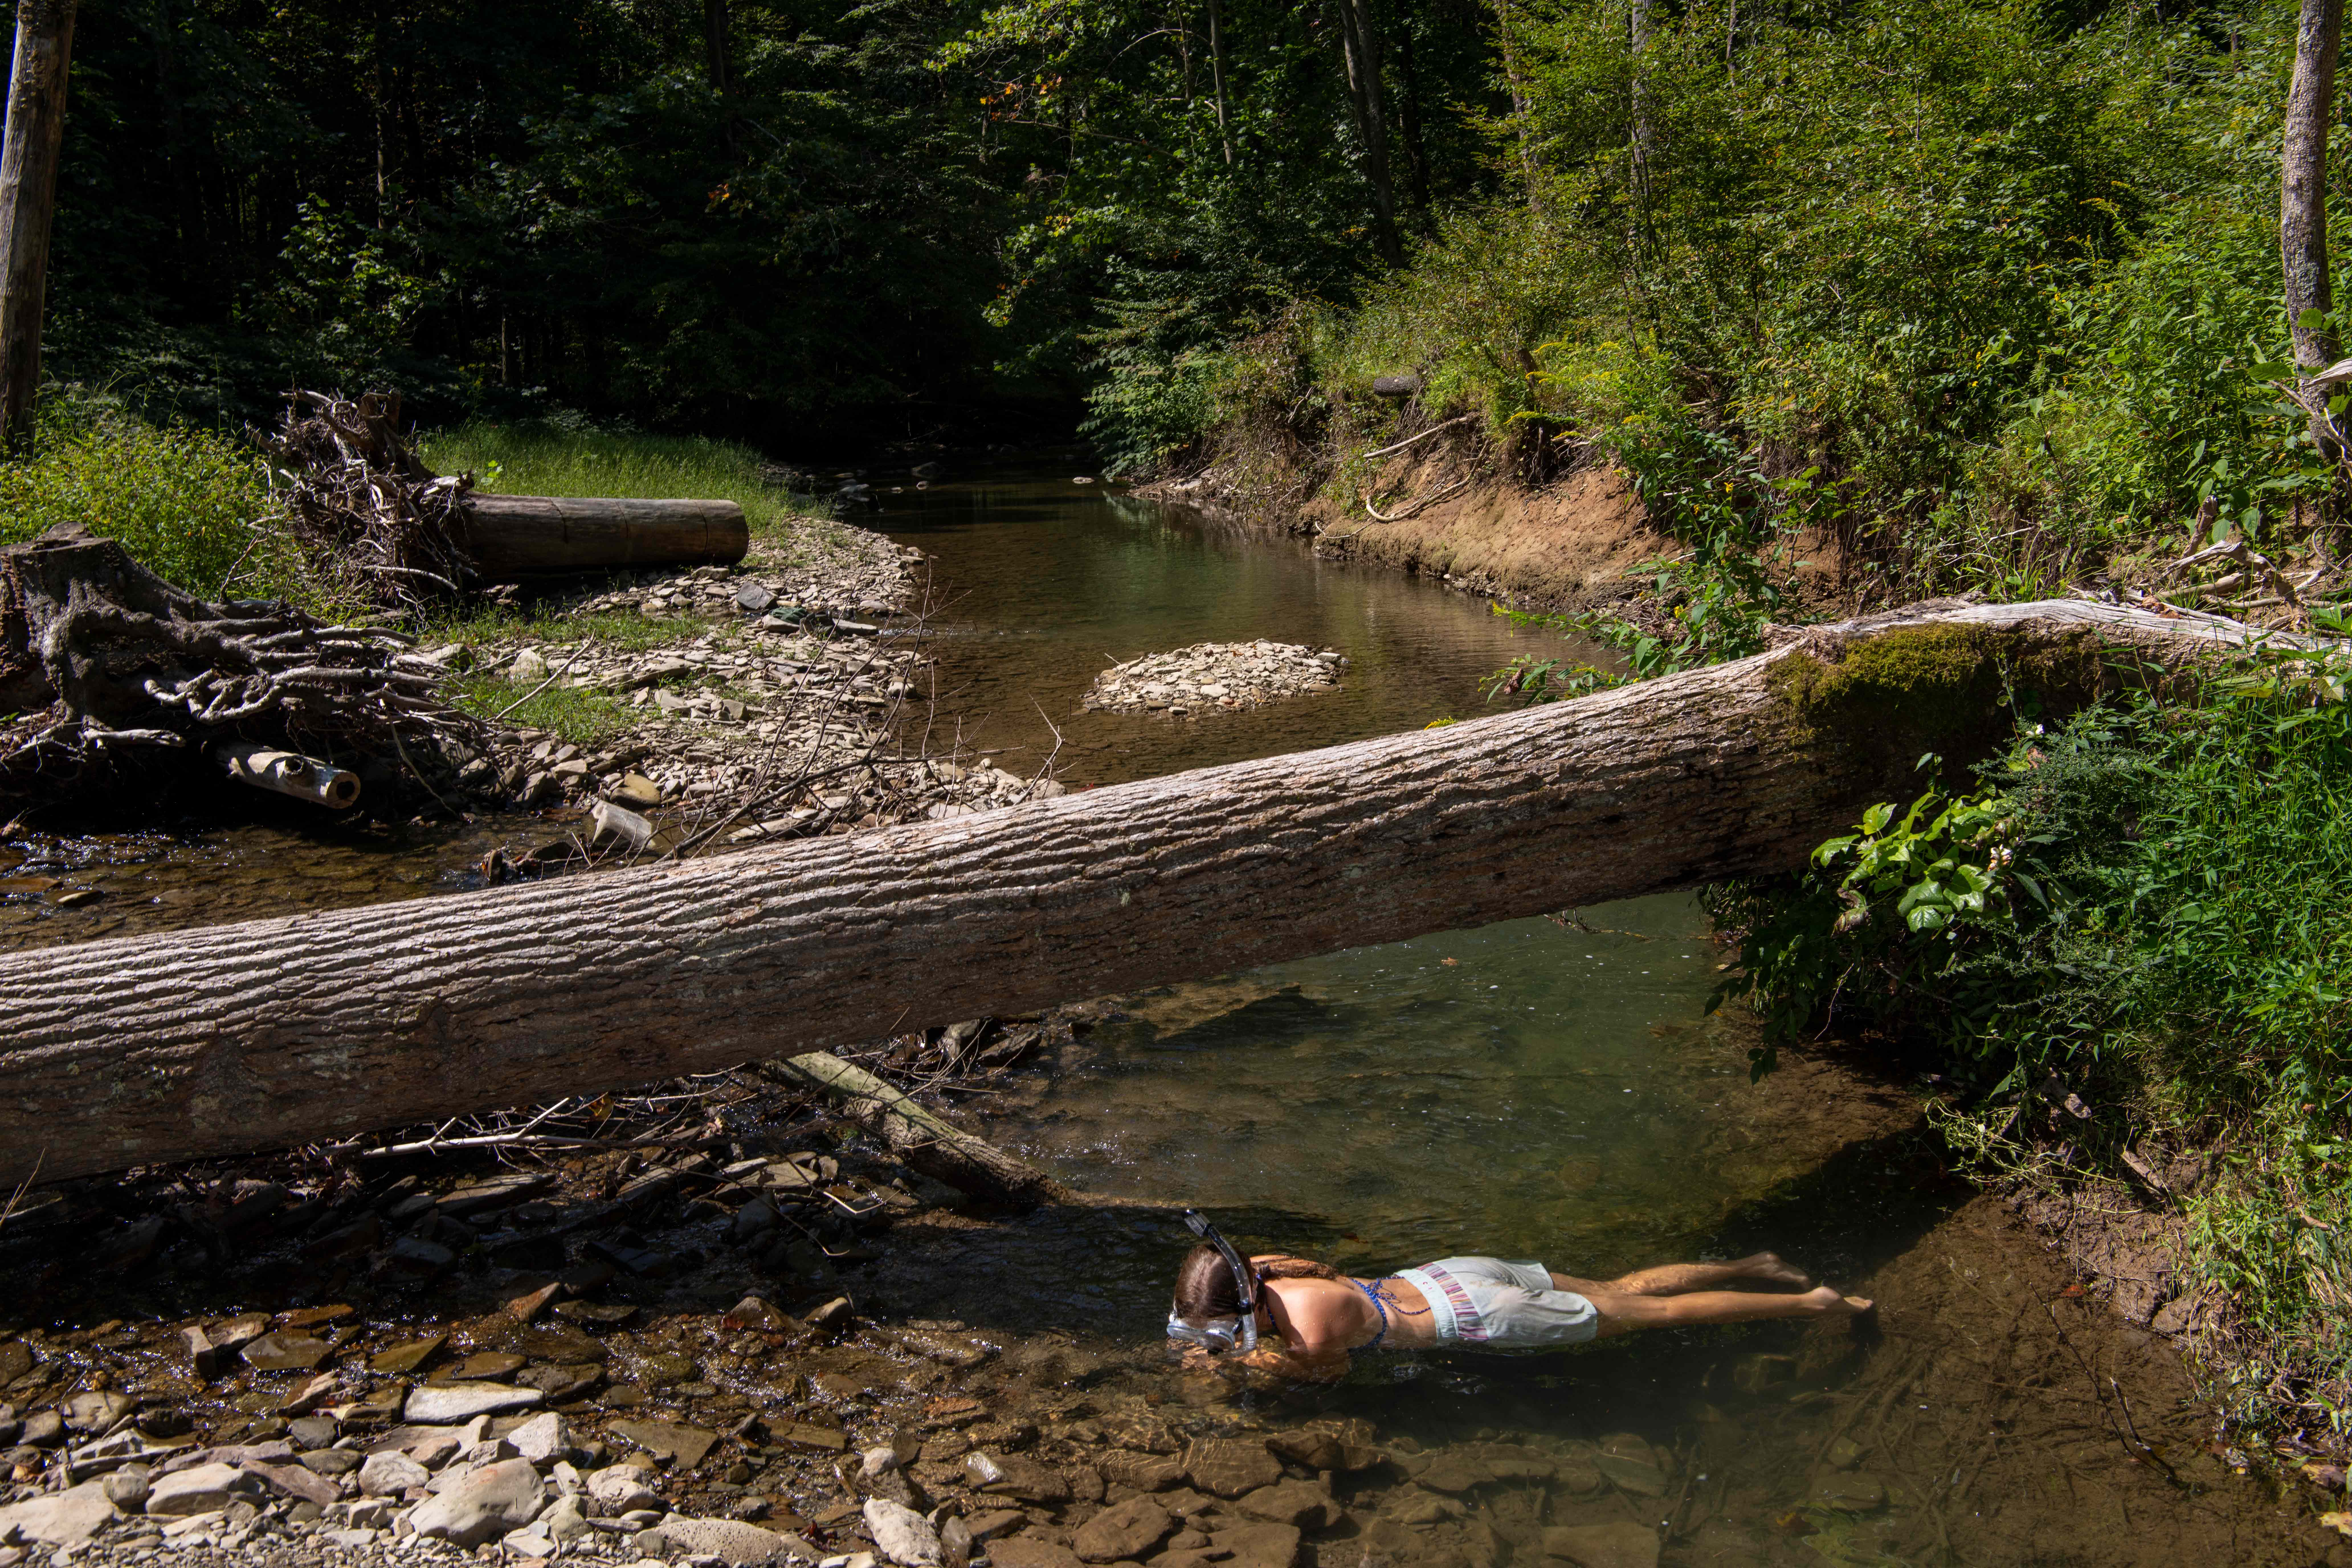 A woman snorkles in a shallow creek near a fallen tree.